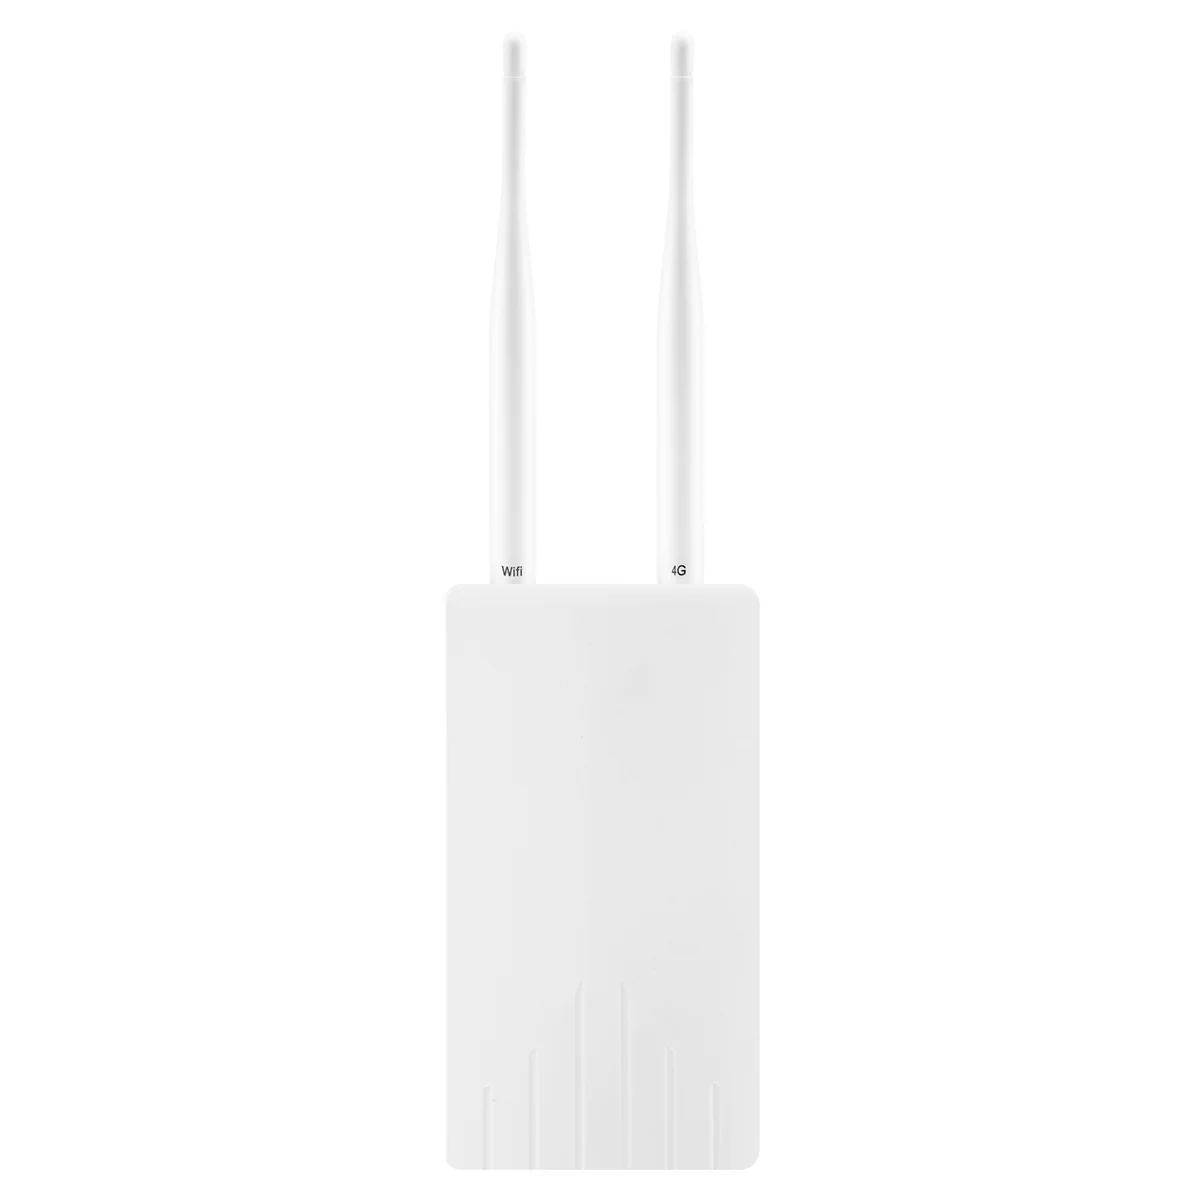 

4G LTE Wireless AP Wifi Router Hotspots CAT4 Outdoor LAN WAN SMA Antenna SIM Card Slot Unlock Modem Cpe Broadband